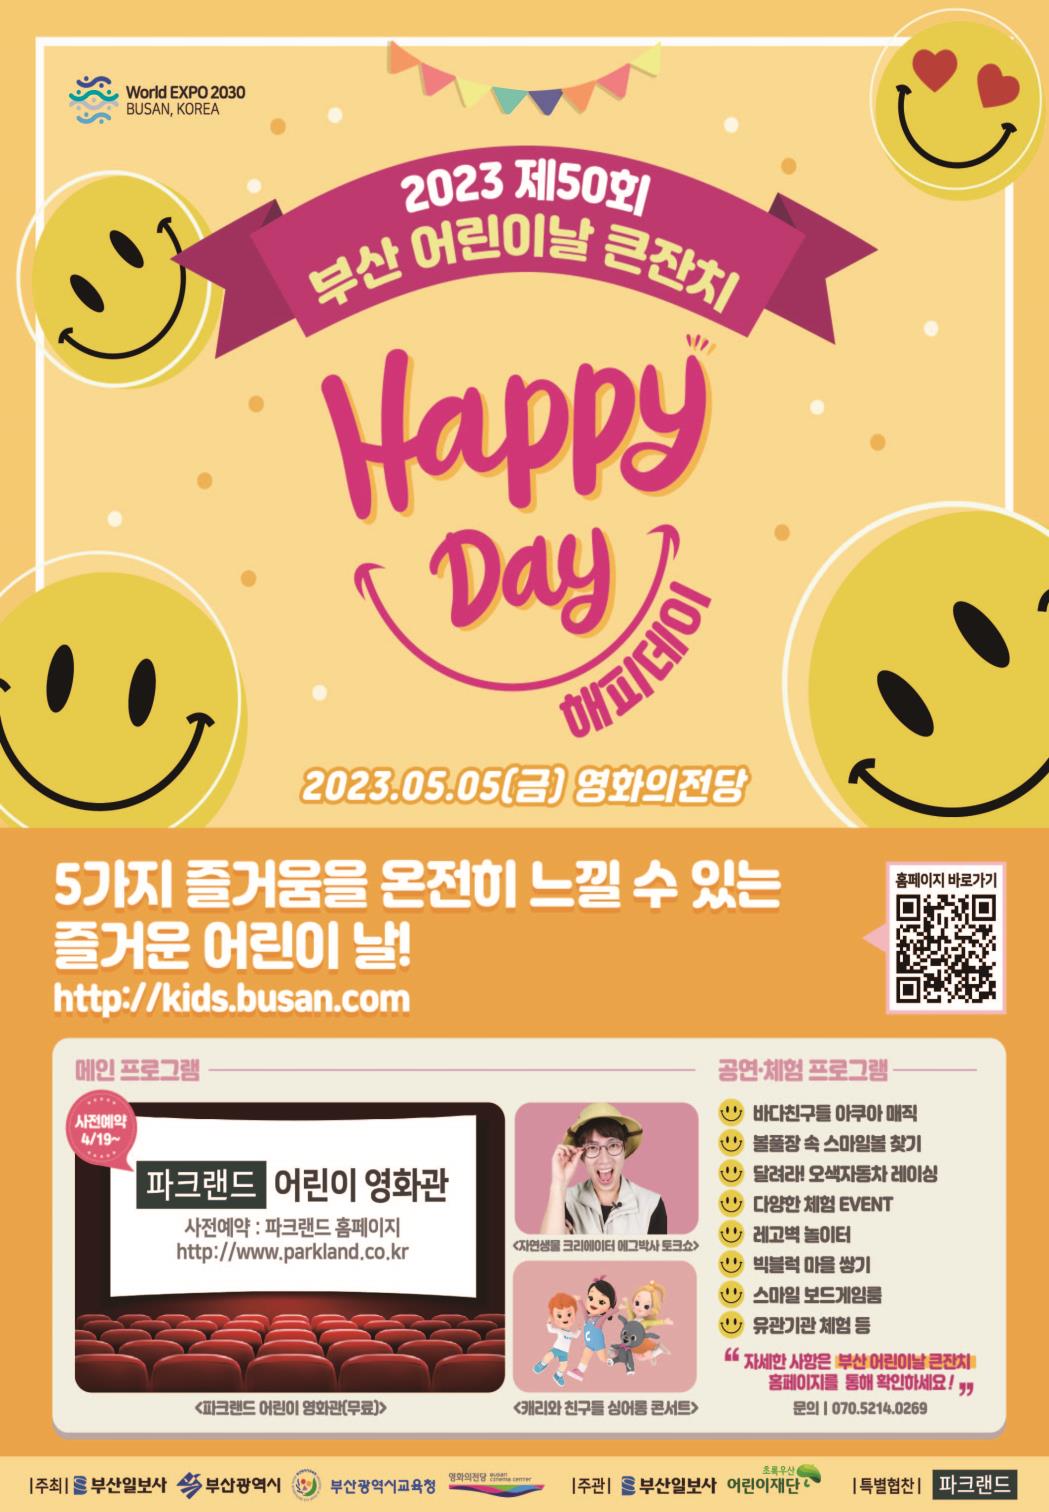 Busan to celebrate Children’s Day with joyful activities